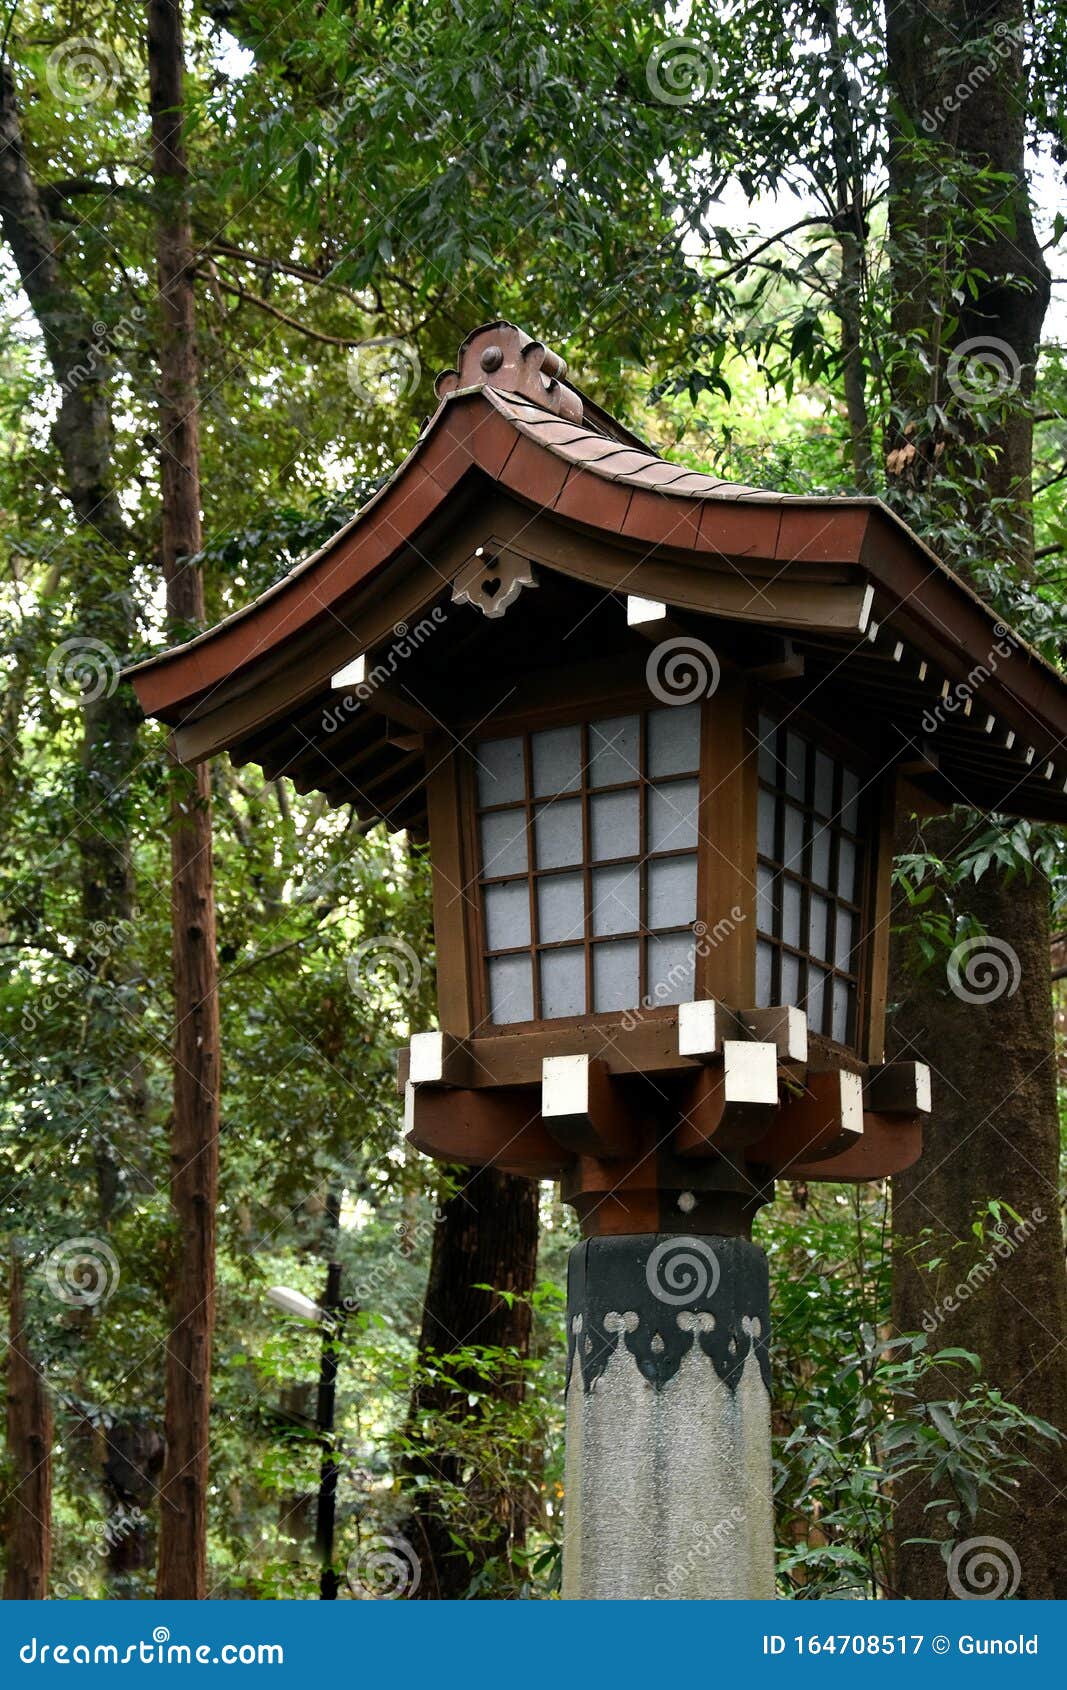 Traditional Lantern at Meiji Shrine in Japan Stock Image - Image of ...